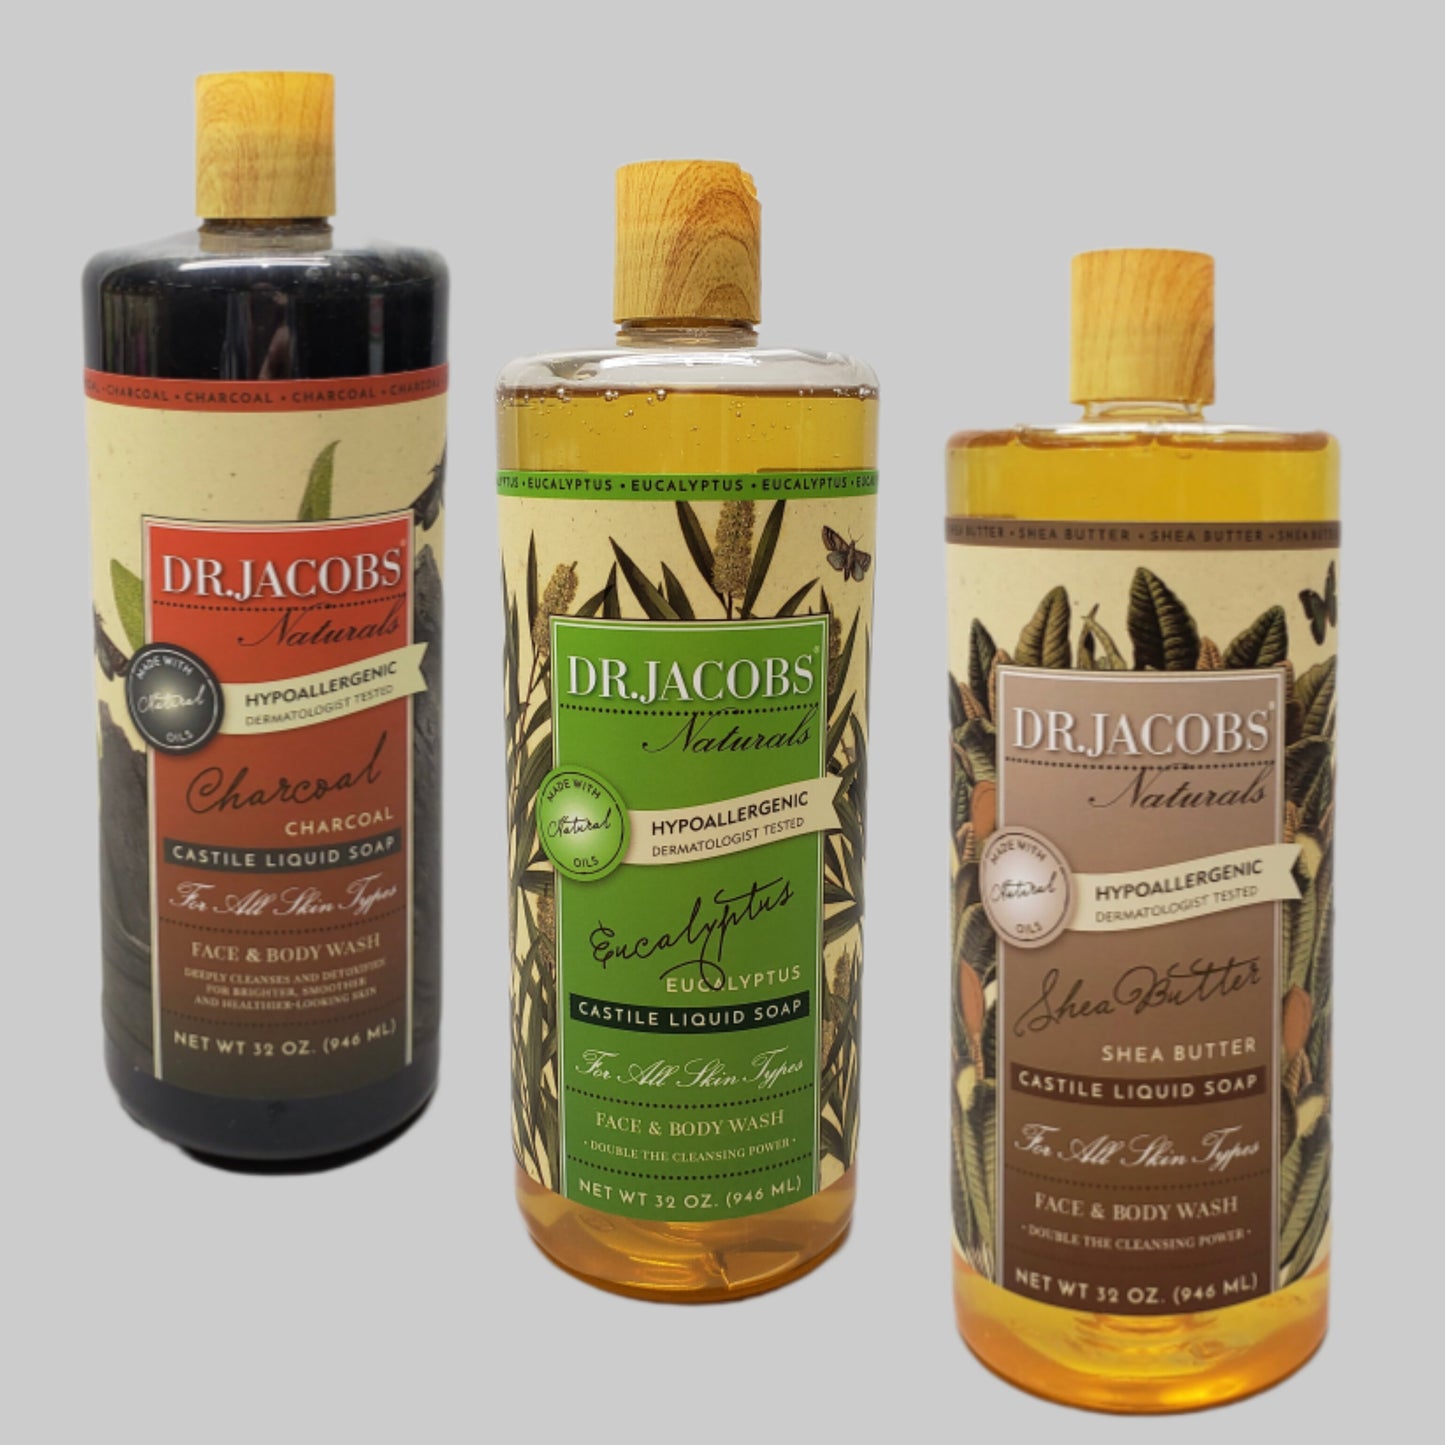 DR. JACOBS NATURALS Castile Liquid Soap Lot of 3: Charcoal, Eucalyptus, Shea Butter 32 oz (New)